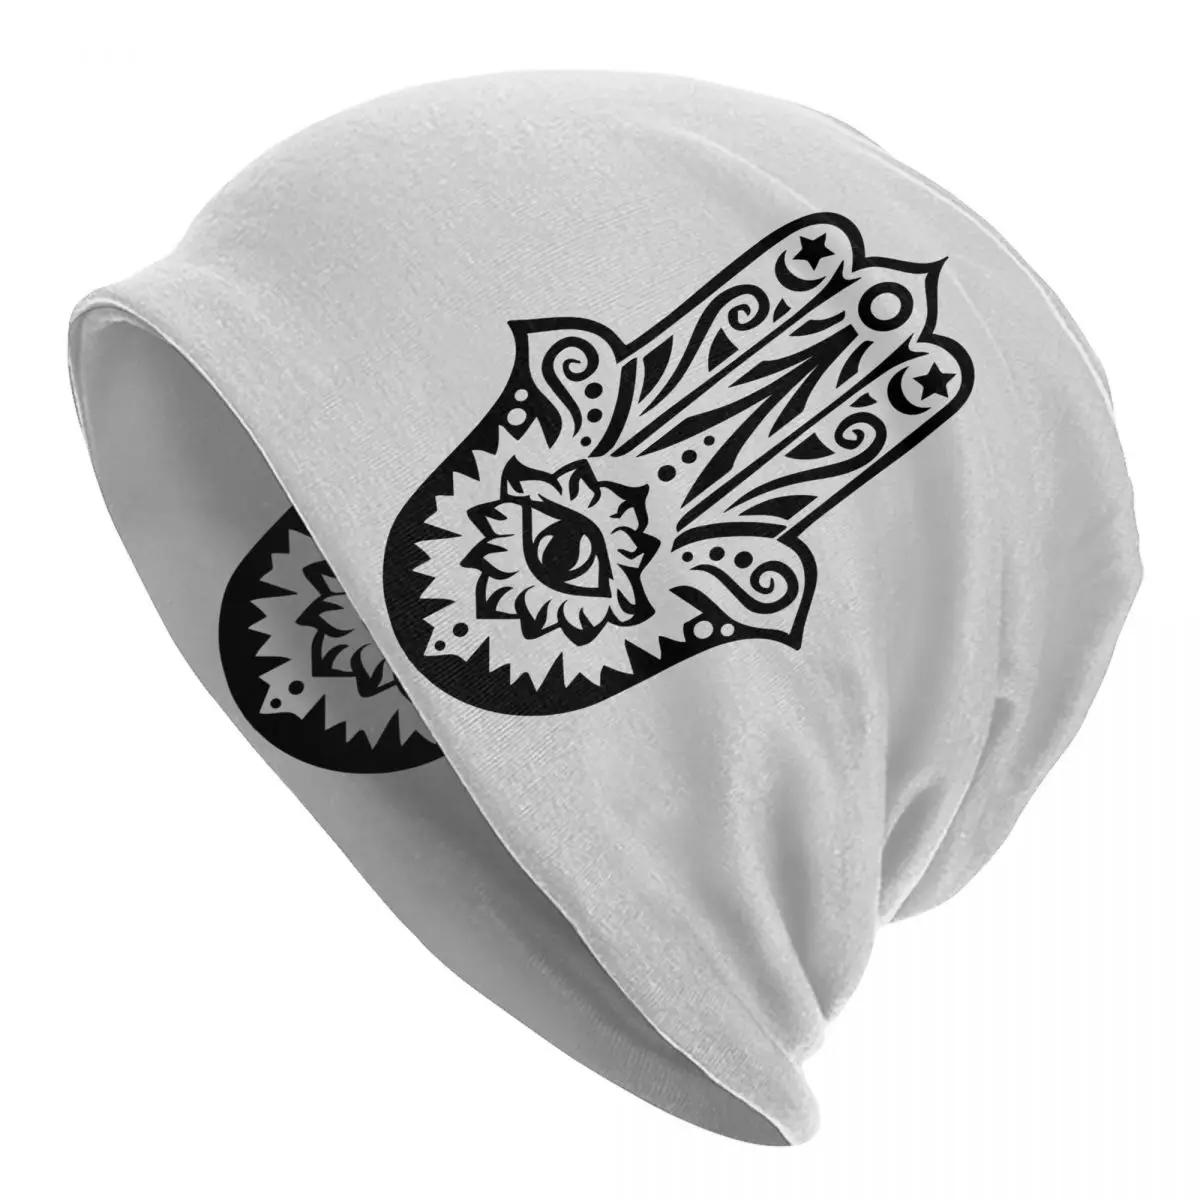 hamsa symbol judaism amulet posters Adult Men's Women's Knit Hat Keep warm winter knitted hat